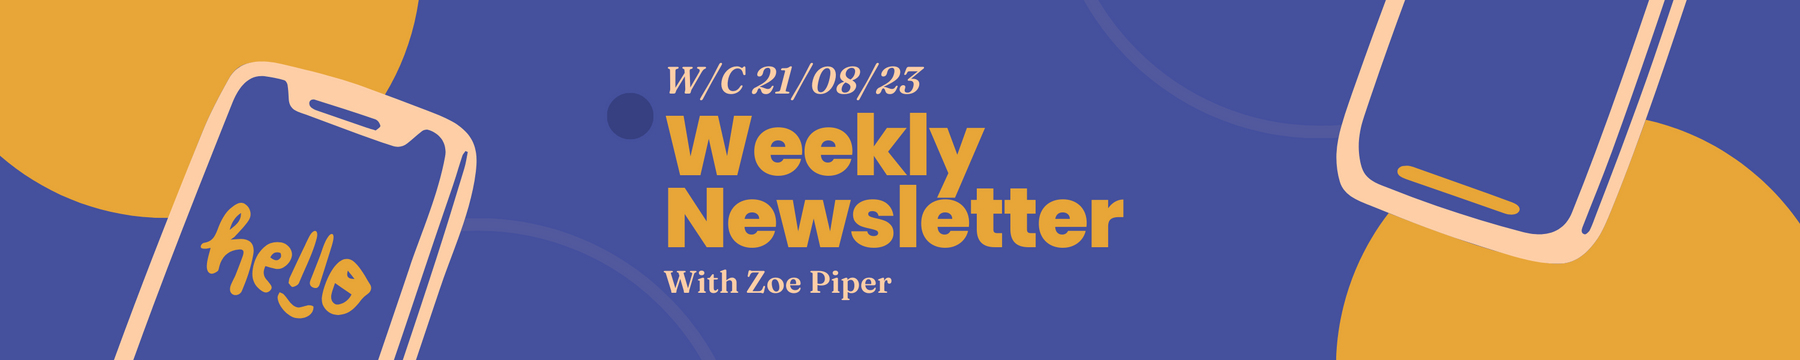 Weekly Newsletter W/C 21/08/23